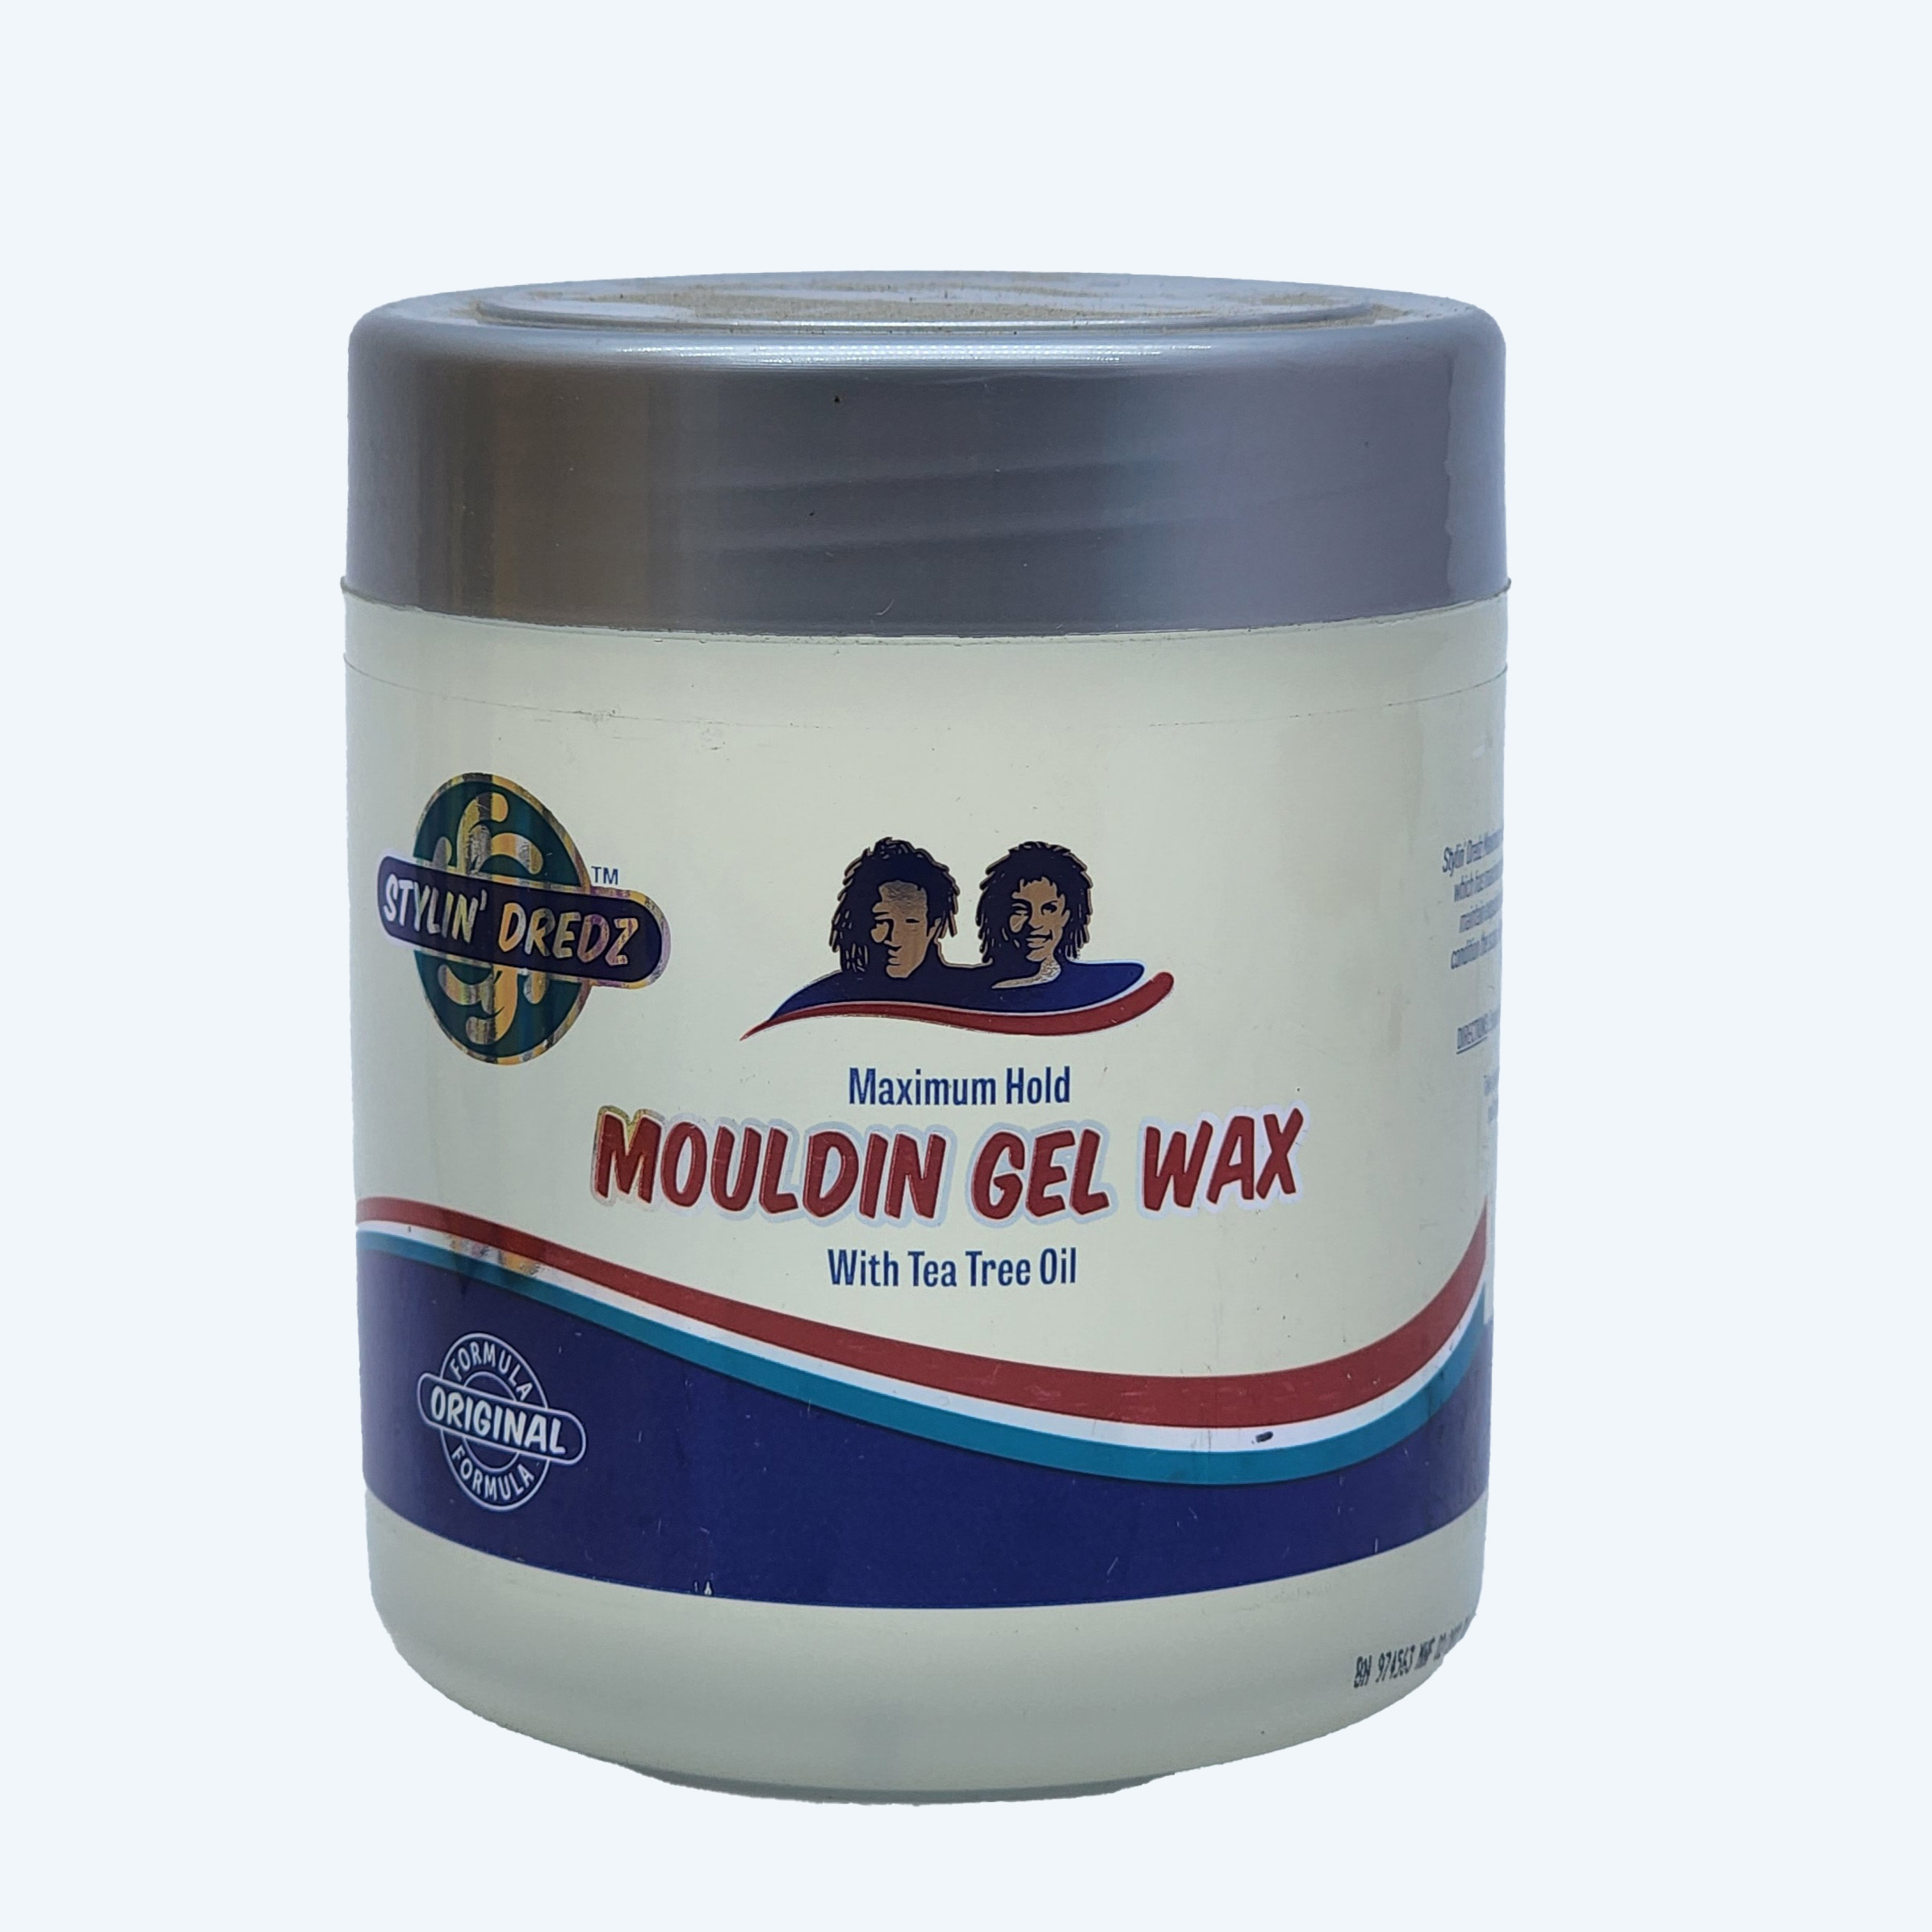 Buy Stylin' Dredz Mouldin' Gel Wax 125ml in Dubai UAE - Get Maximum Hold  for Your Dreads